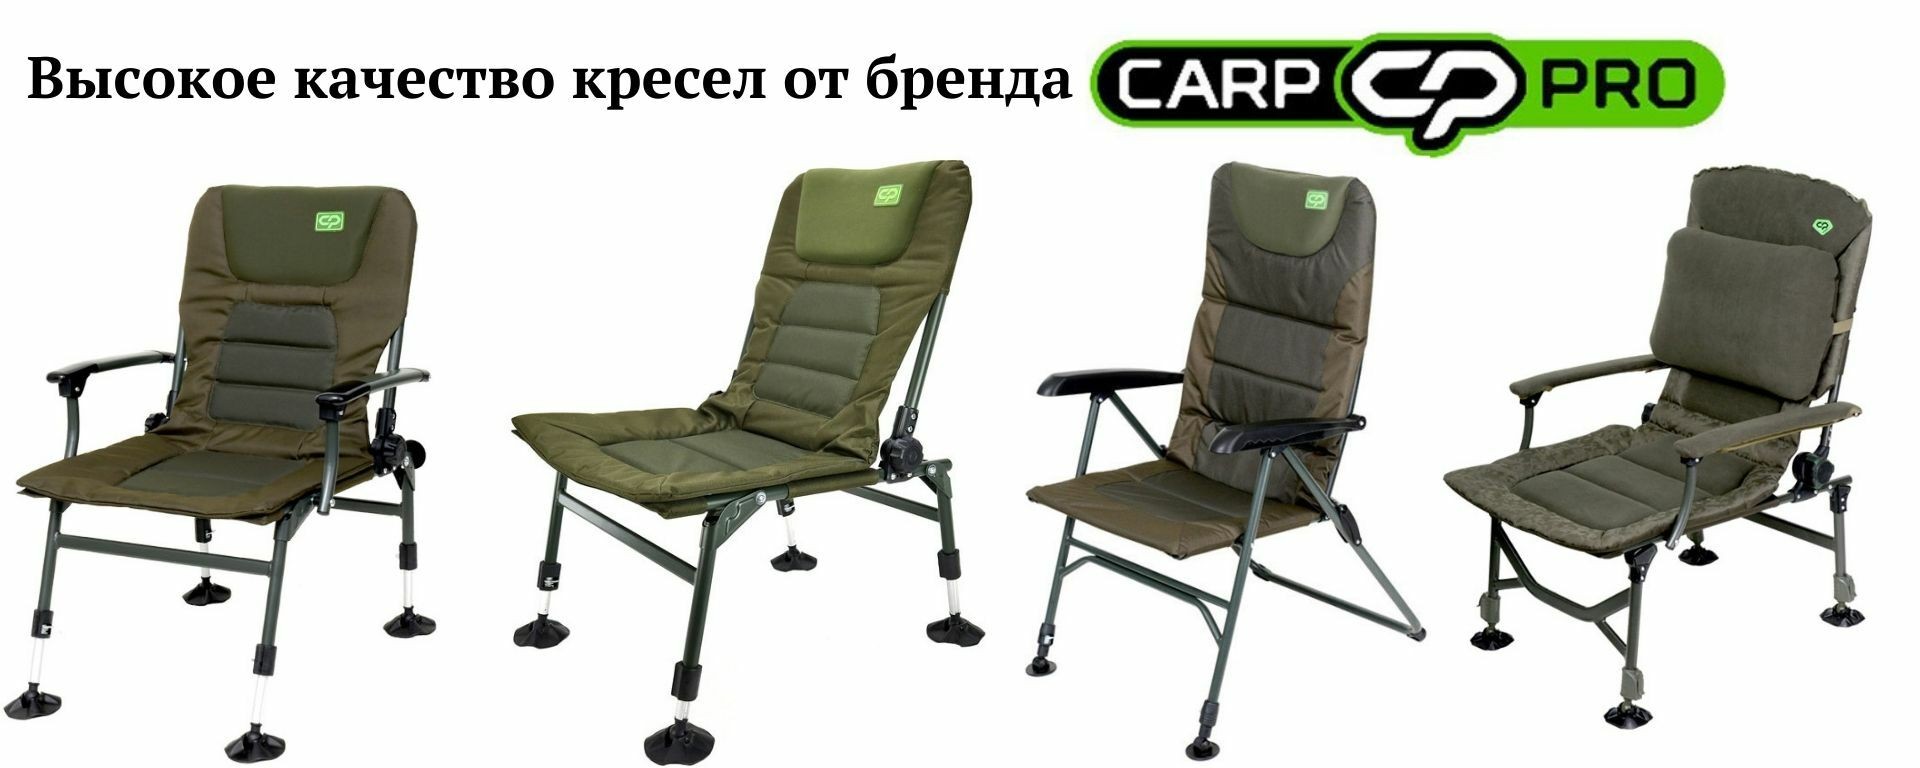 Карповые кресла от Carp Pro (Карп Про)